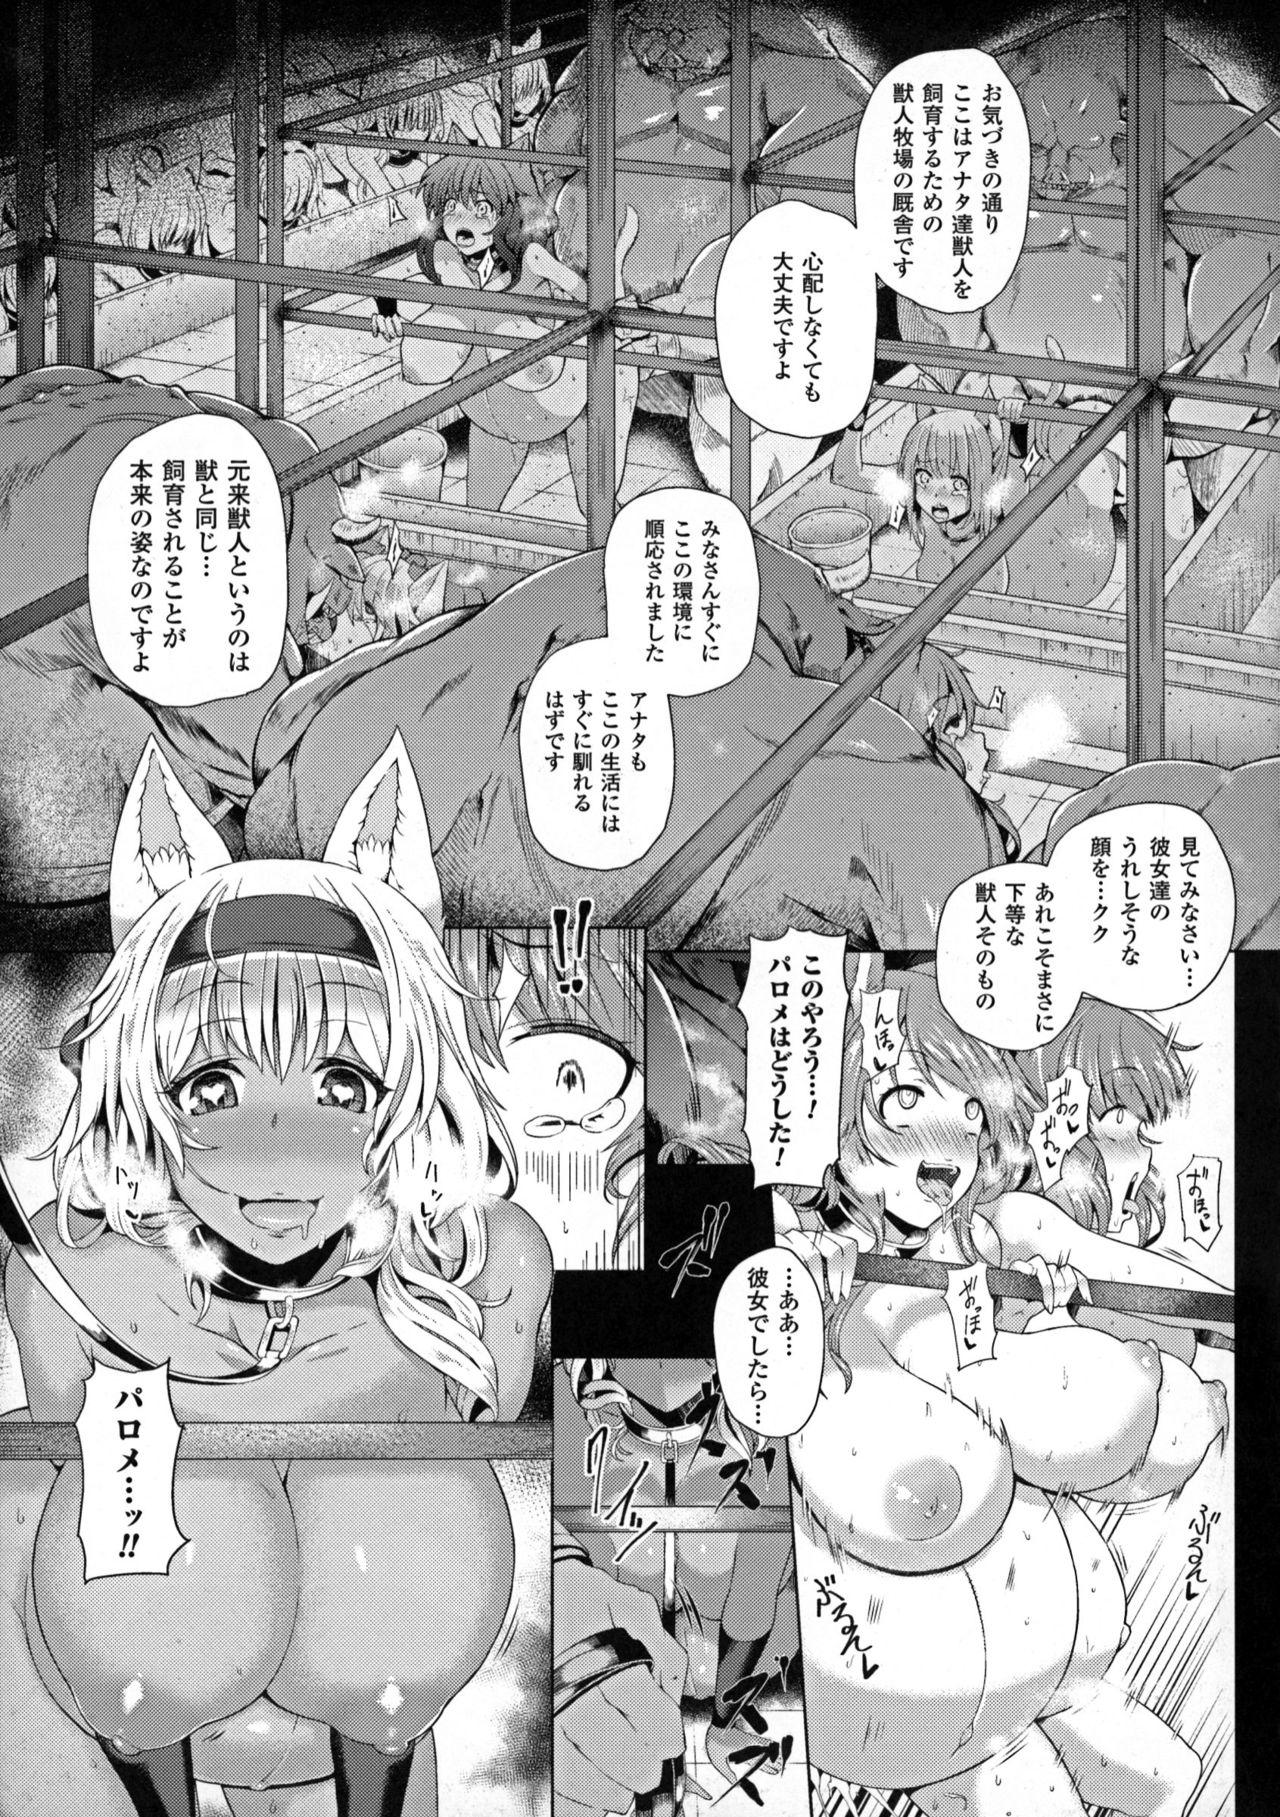 Seigi no Heroine Kangoku File DX vol. 5 54